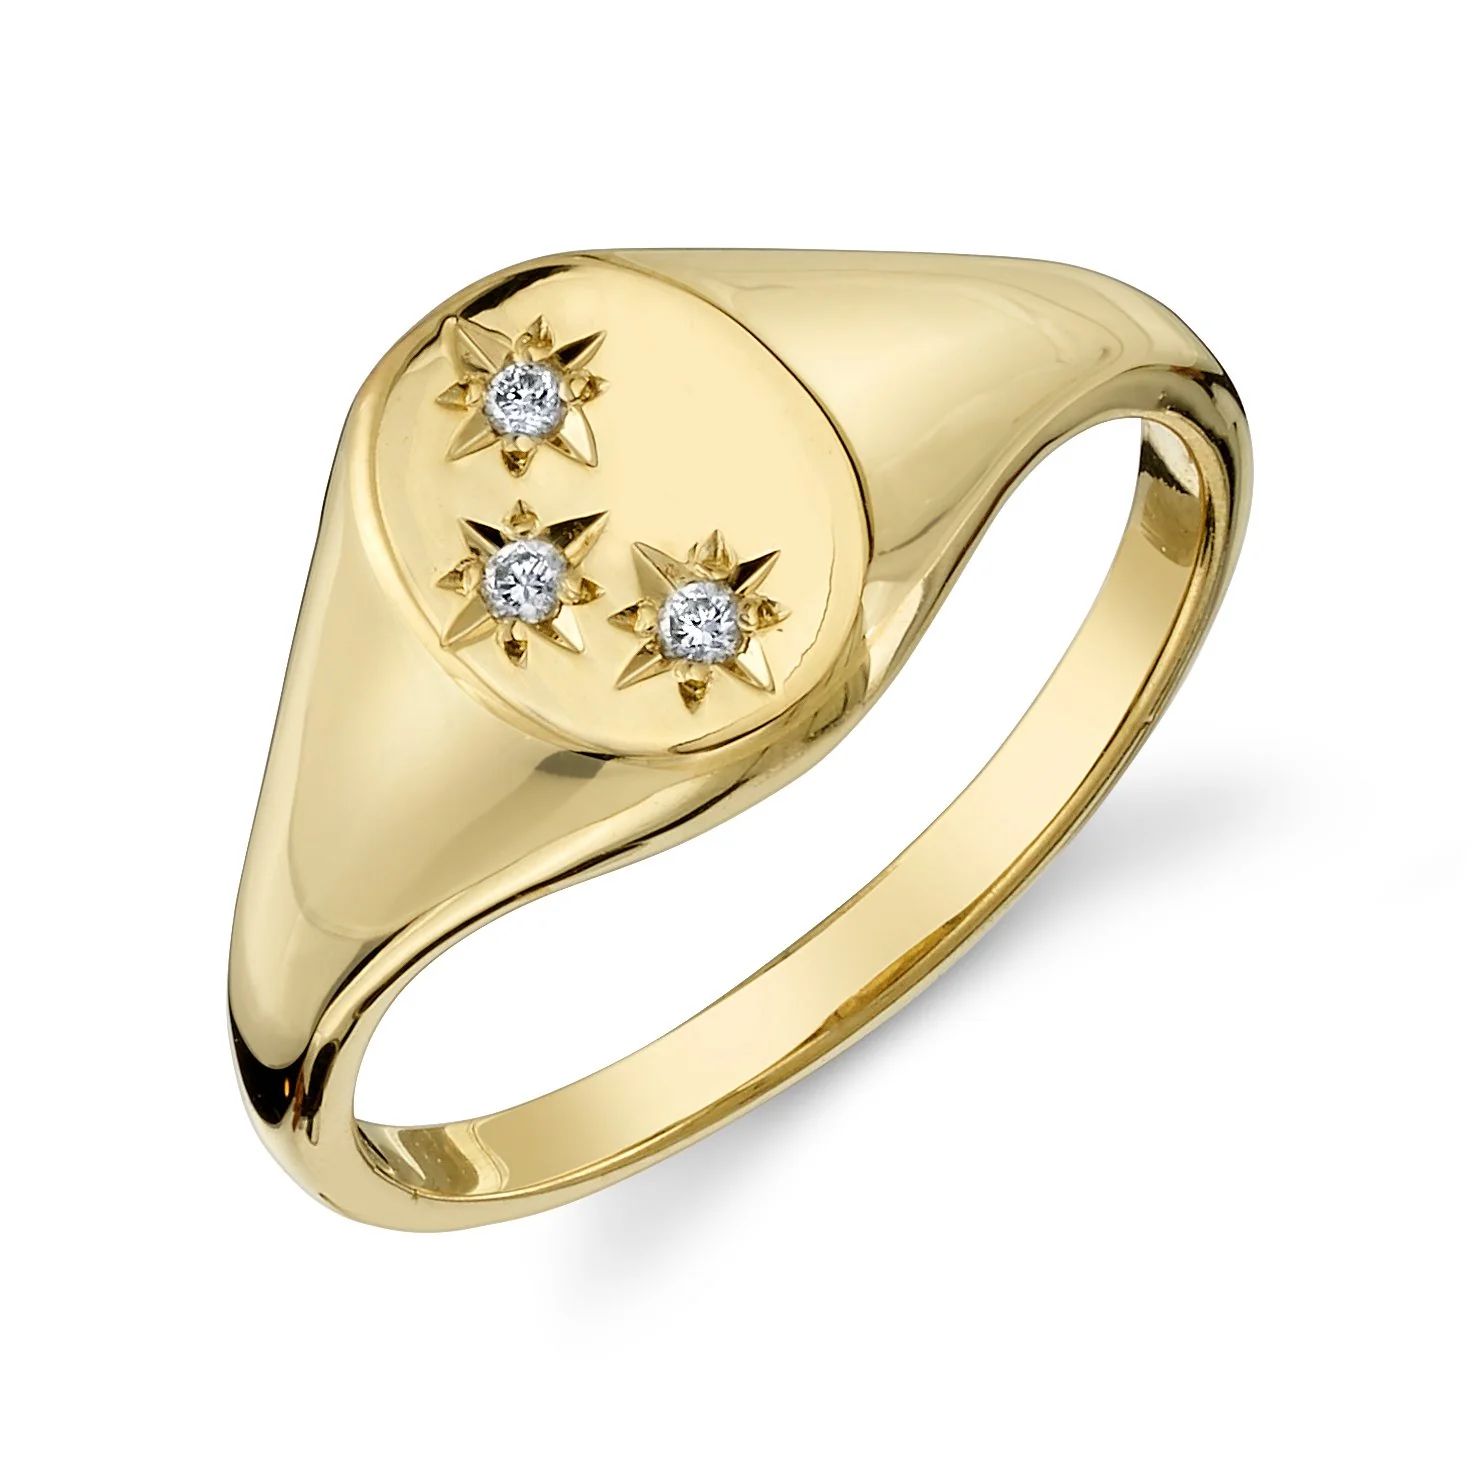 THREE STAR SIGNET RING - Sentimental Everyday Fine Jewelry | Starling Jewelry